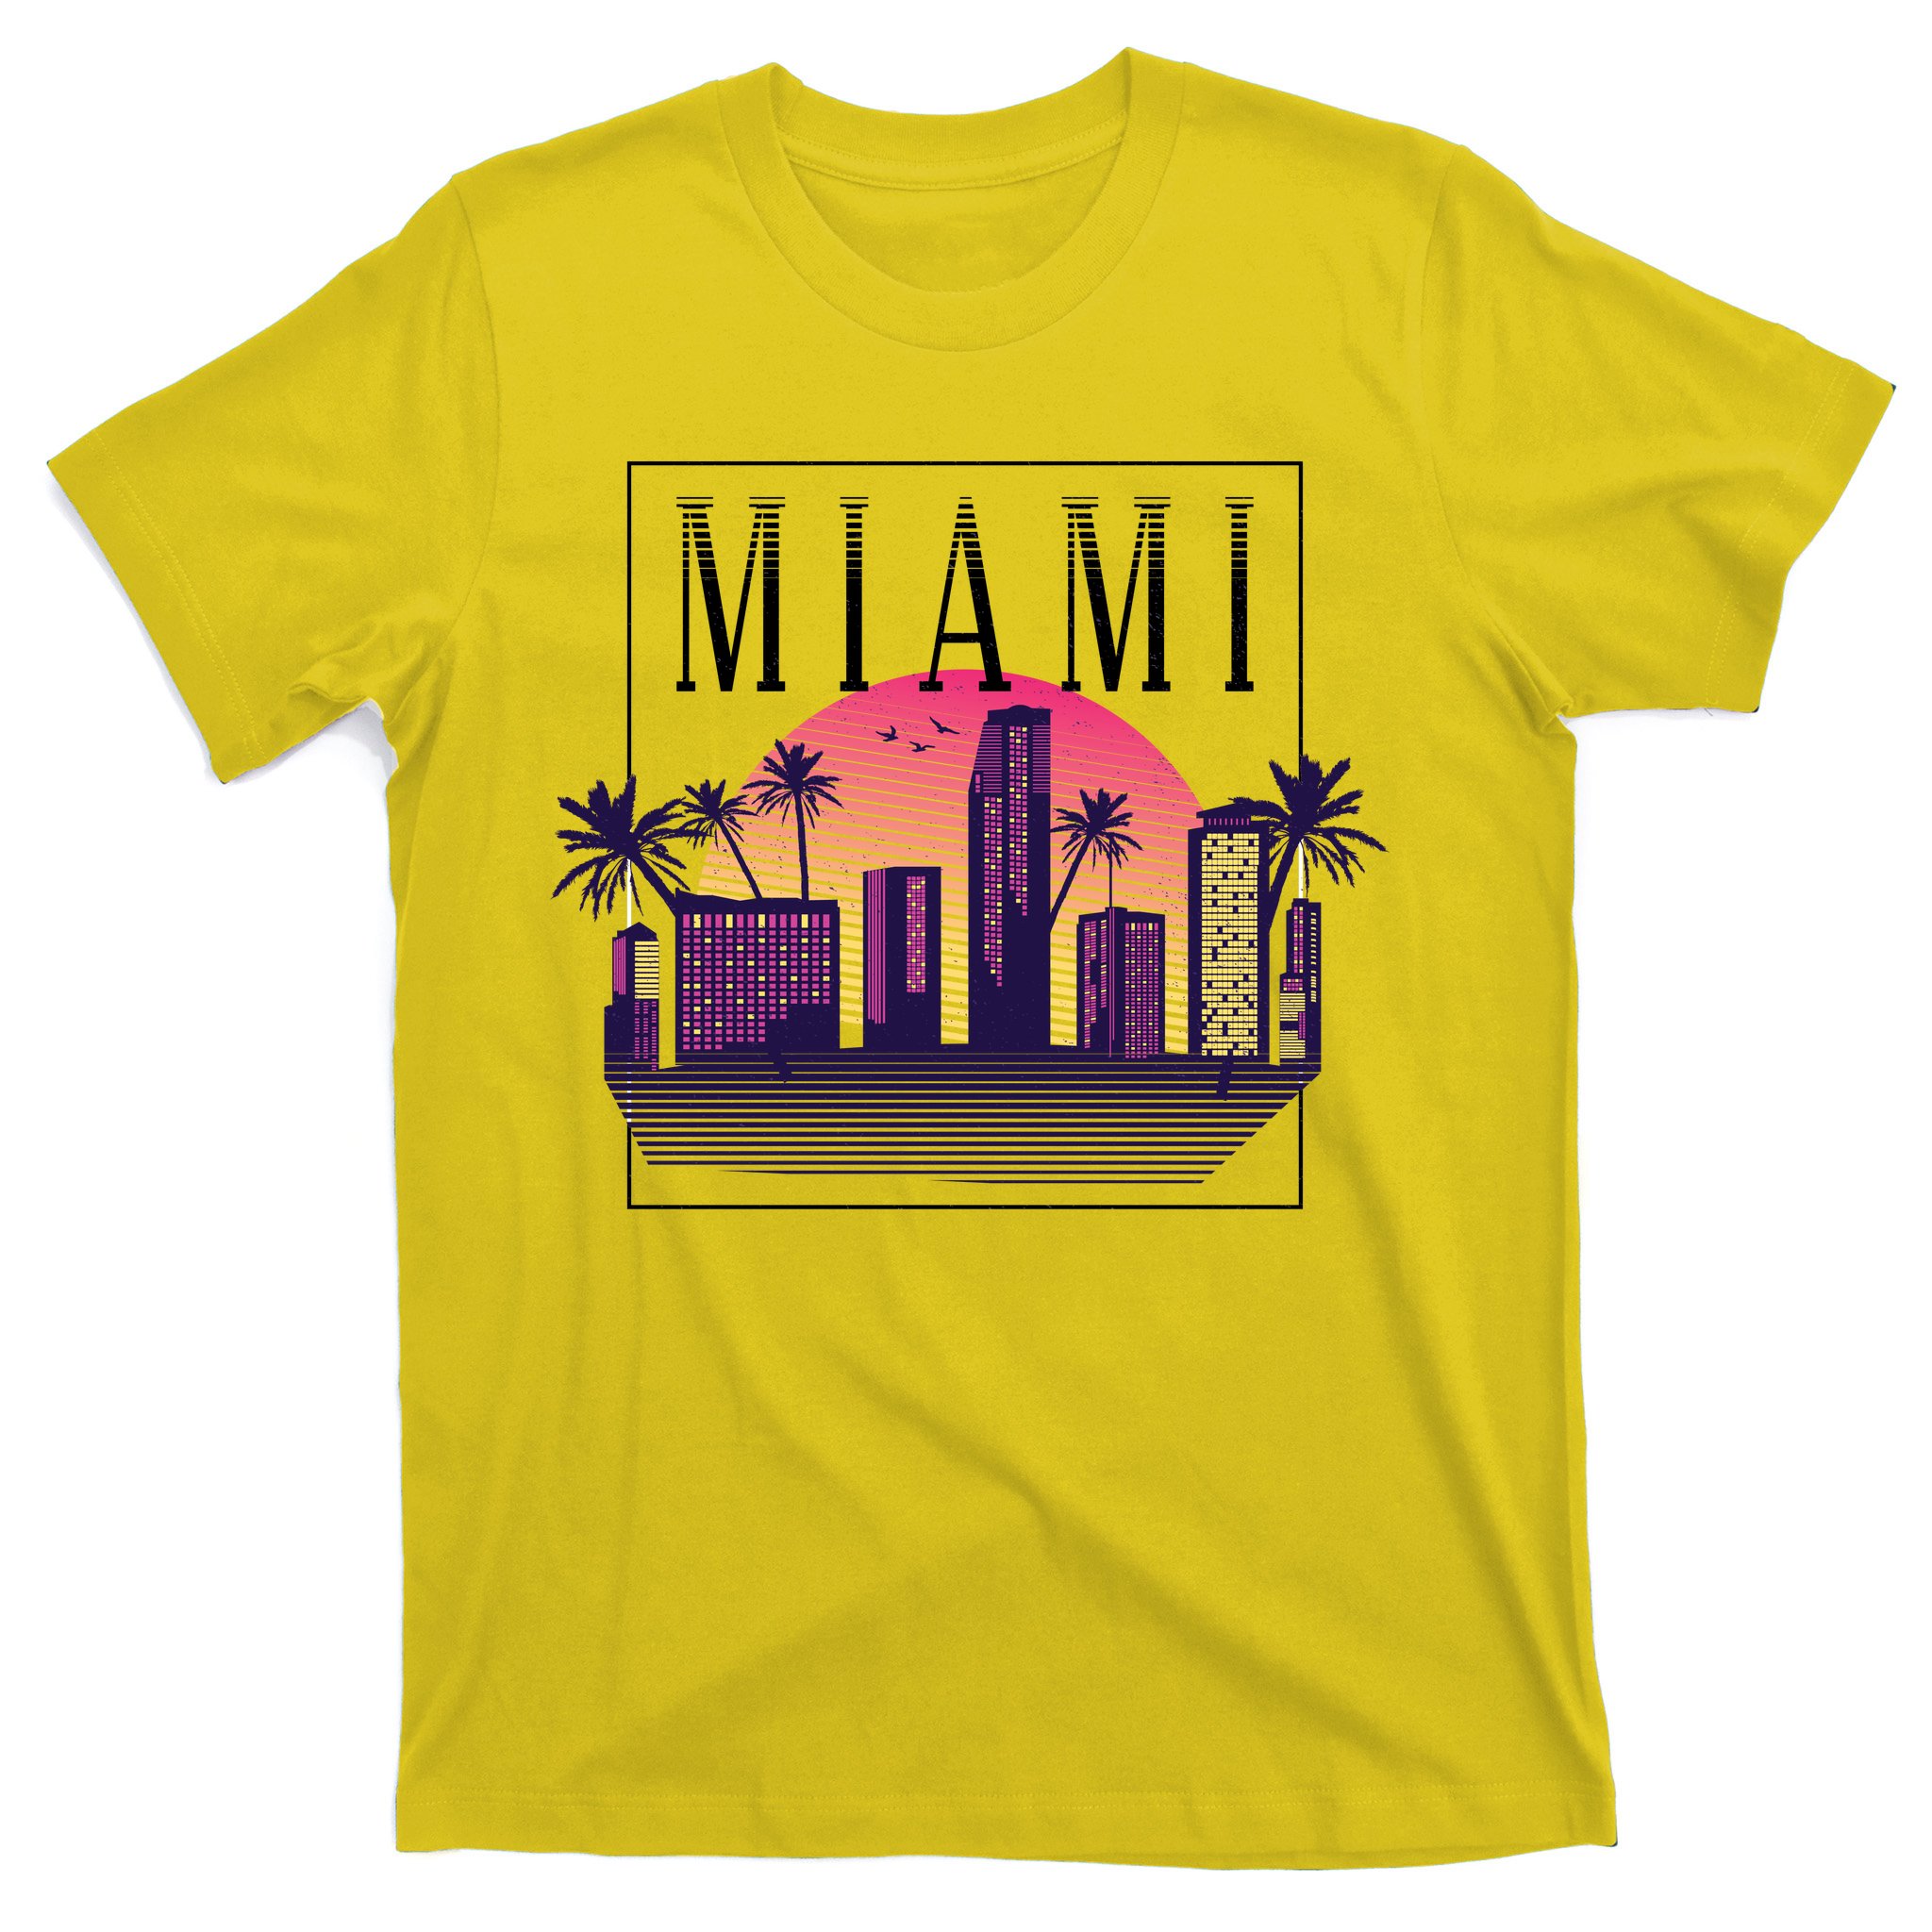 Adult Unisex Skyline Miami T Shirt Miami Florida T-Shirt